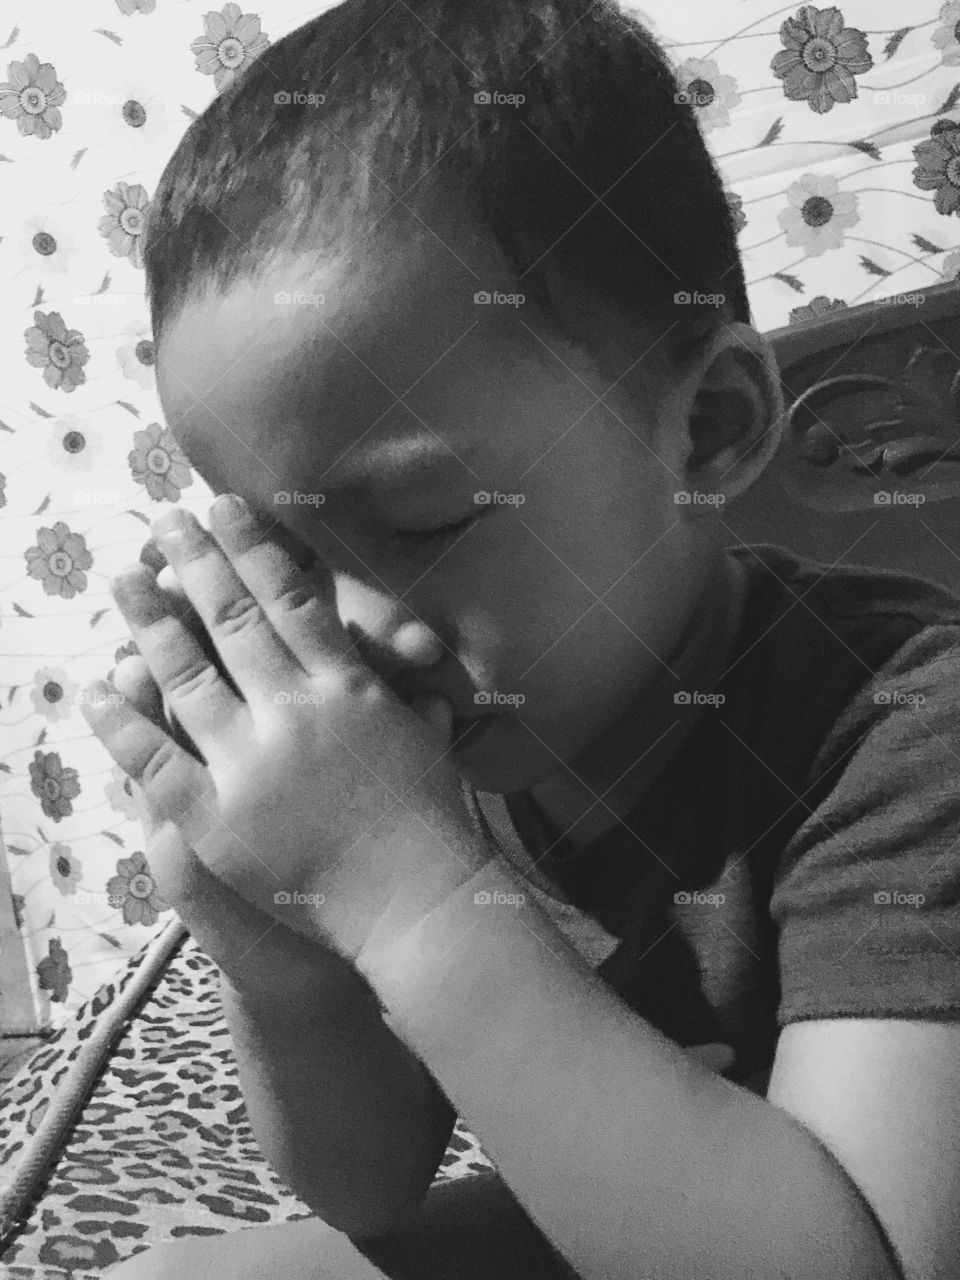 A little boy praying